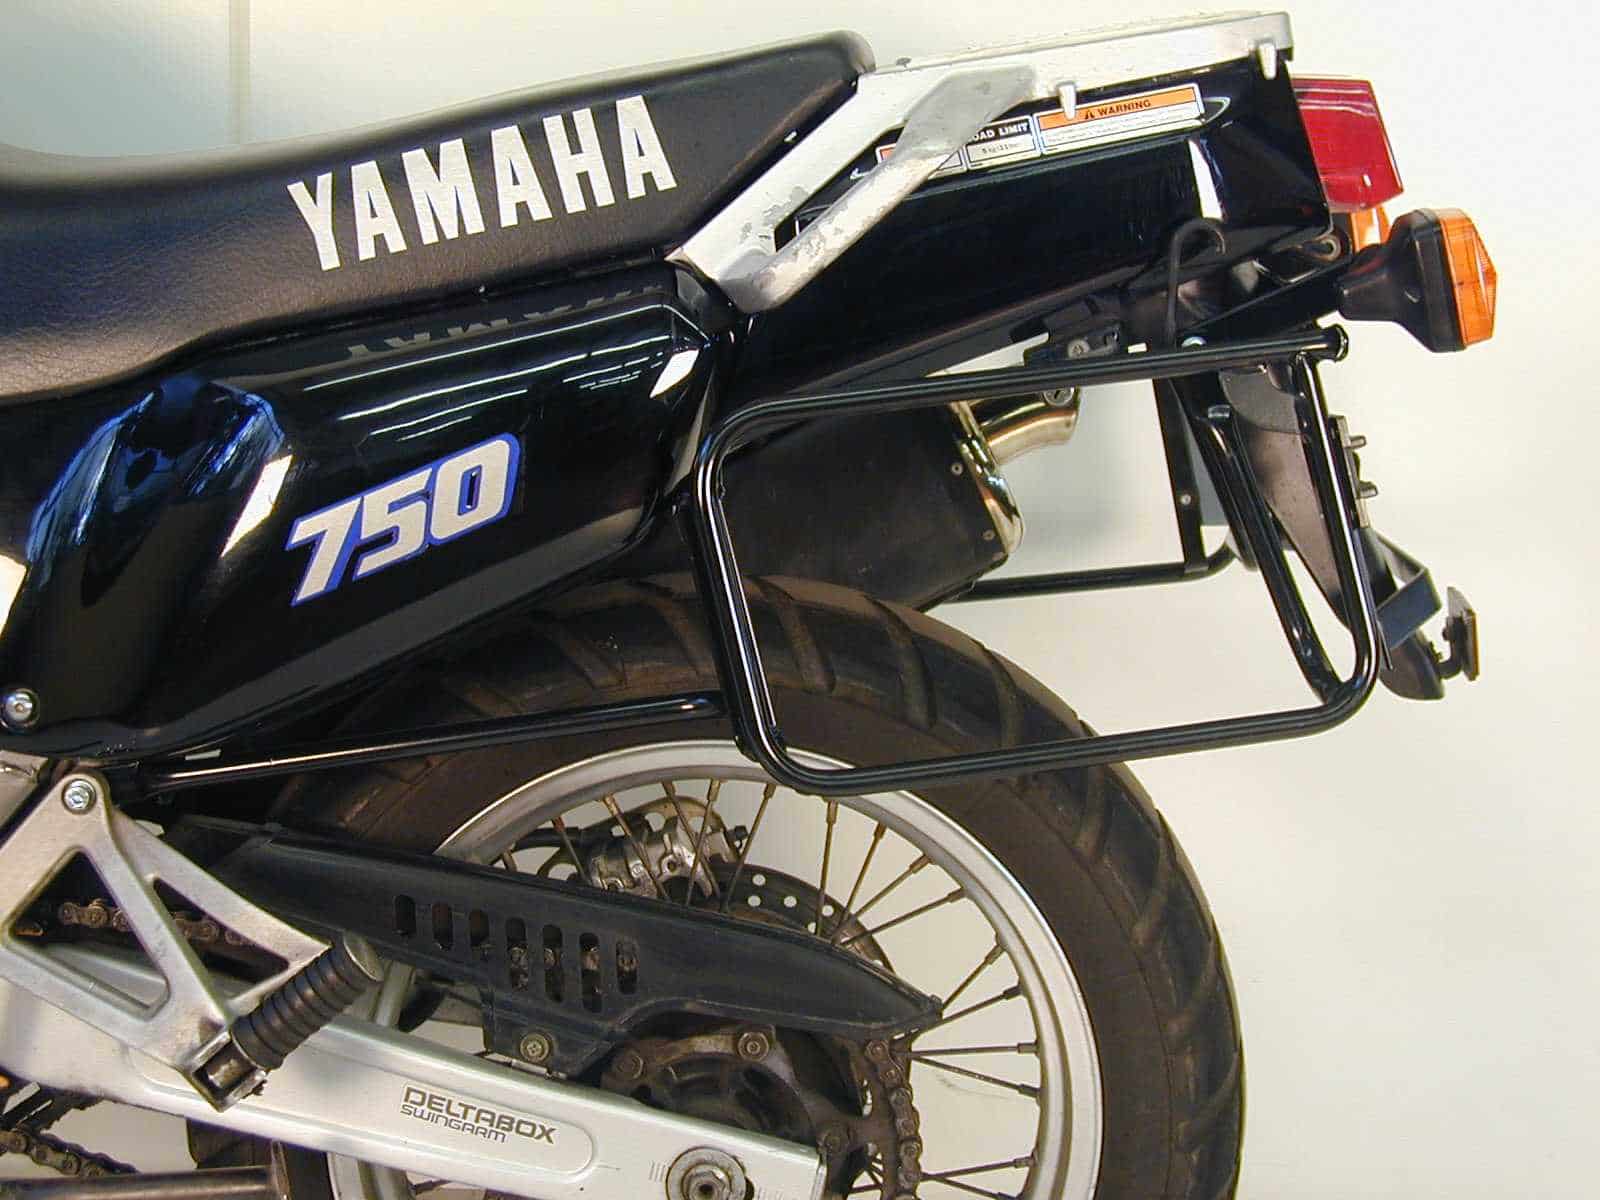 Sidecarrier permanent mounted black for Yamaha XTZ 750 Super Ténéré (1989-1997) (Sebring exhaust)